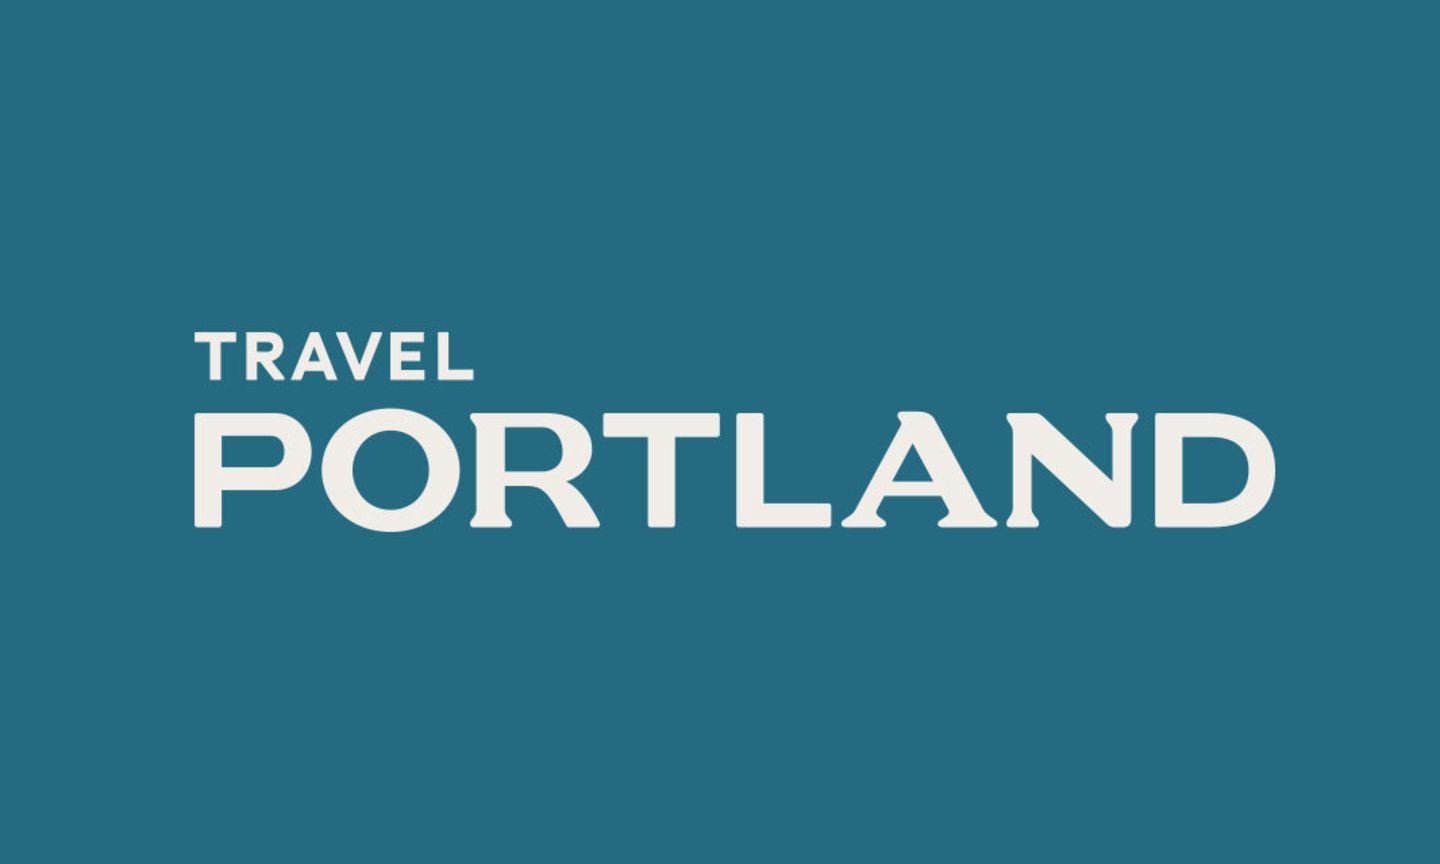 Travel Portland aspect ratio